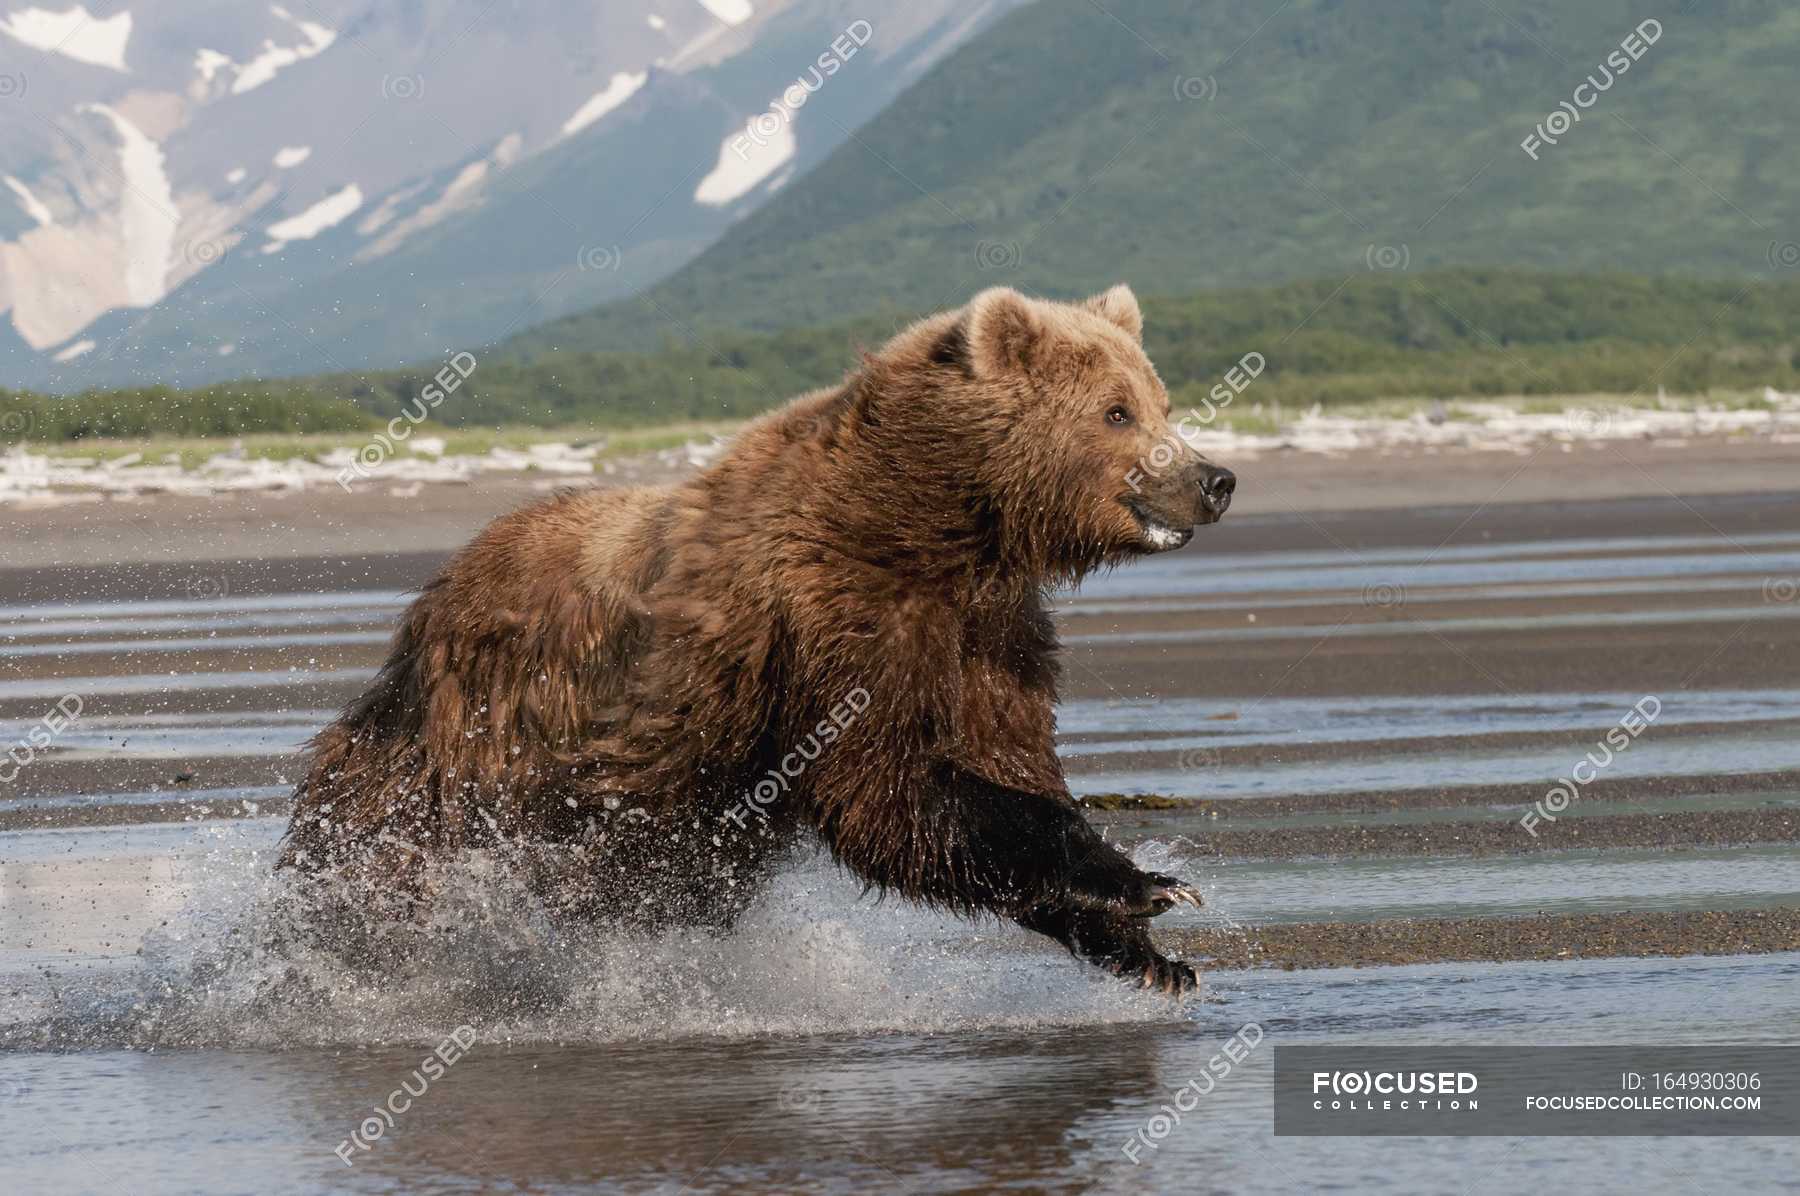 Бурый медведь скорость бега км ч. Медведь бежит. Скорость медведя. Скорость бега медведя. Скорость медведя Гризли.